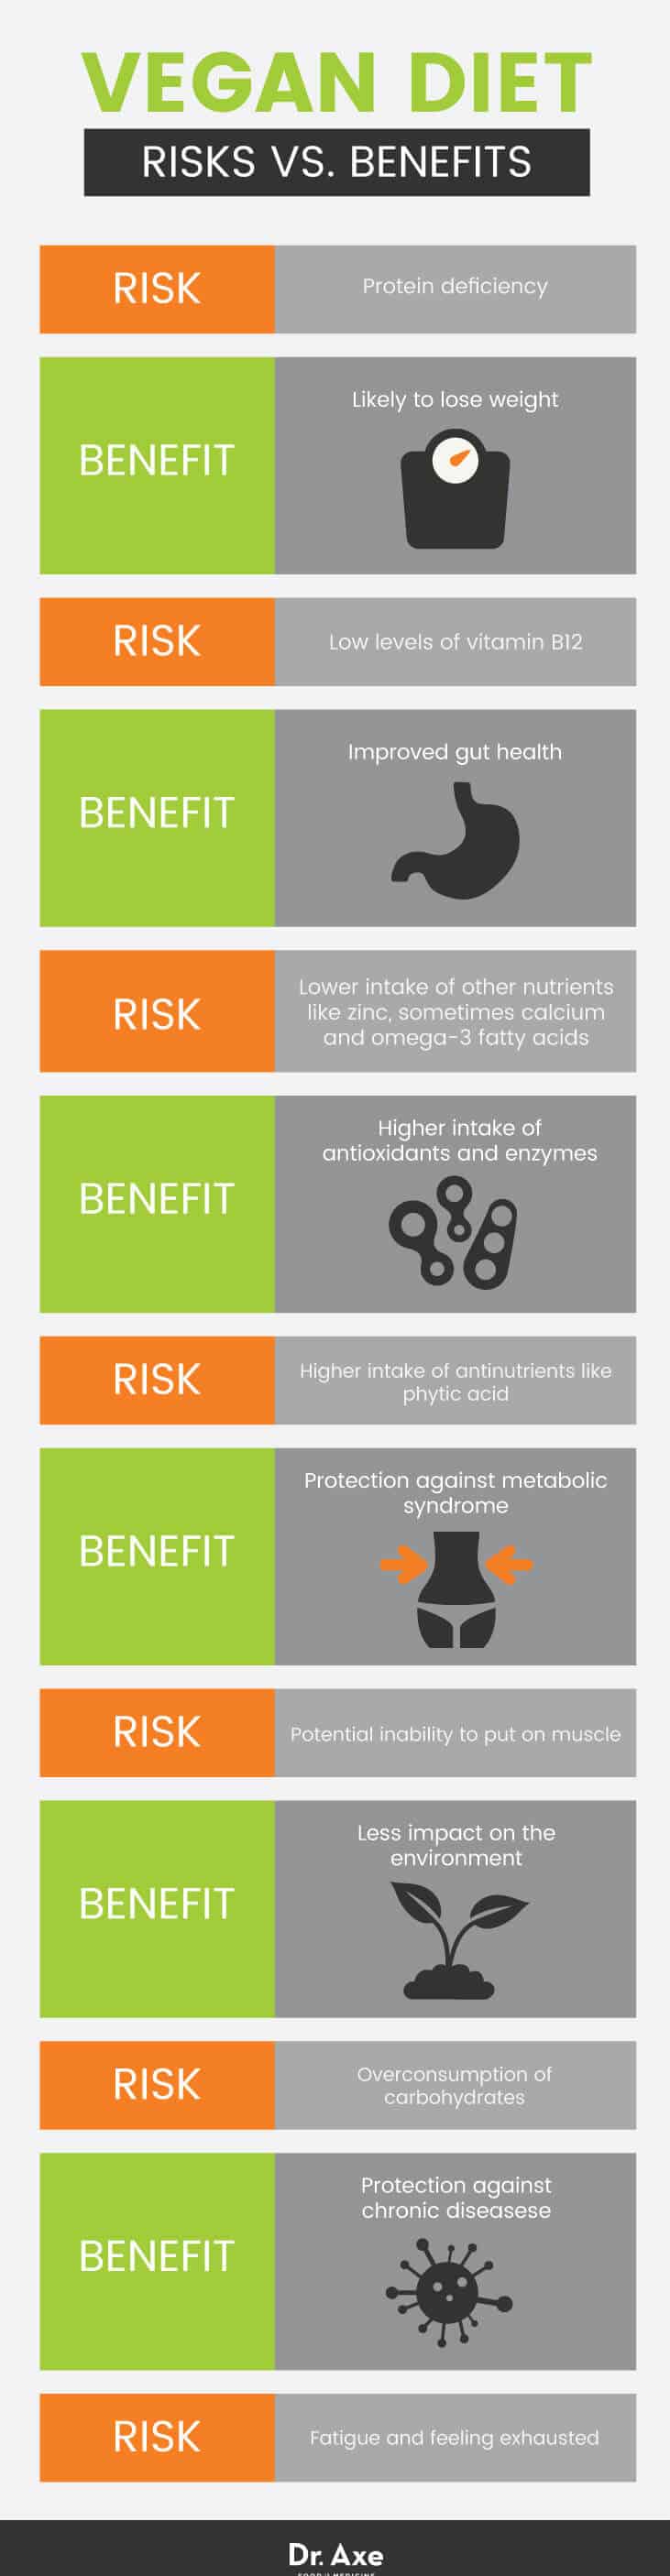 Vegan diet risks vs. benefits - Dr. Axe